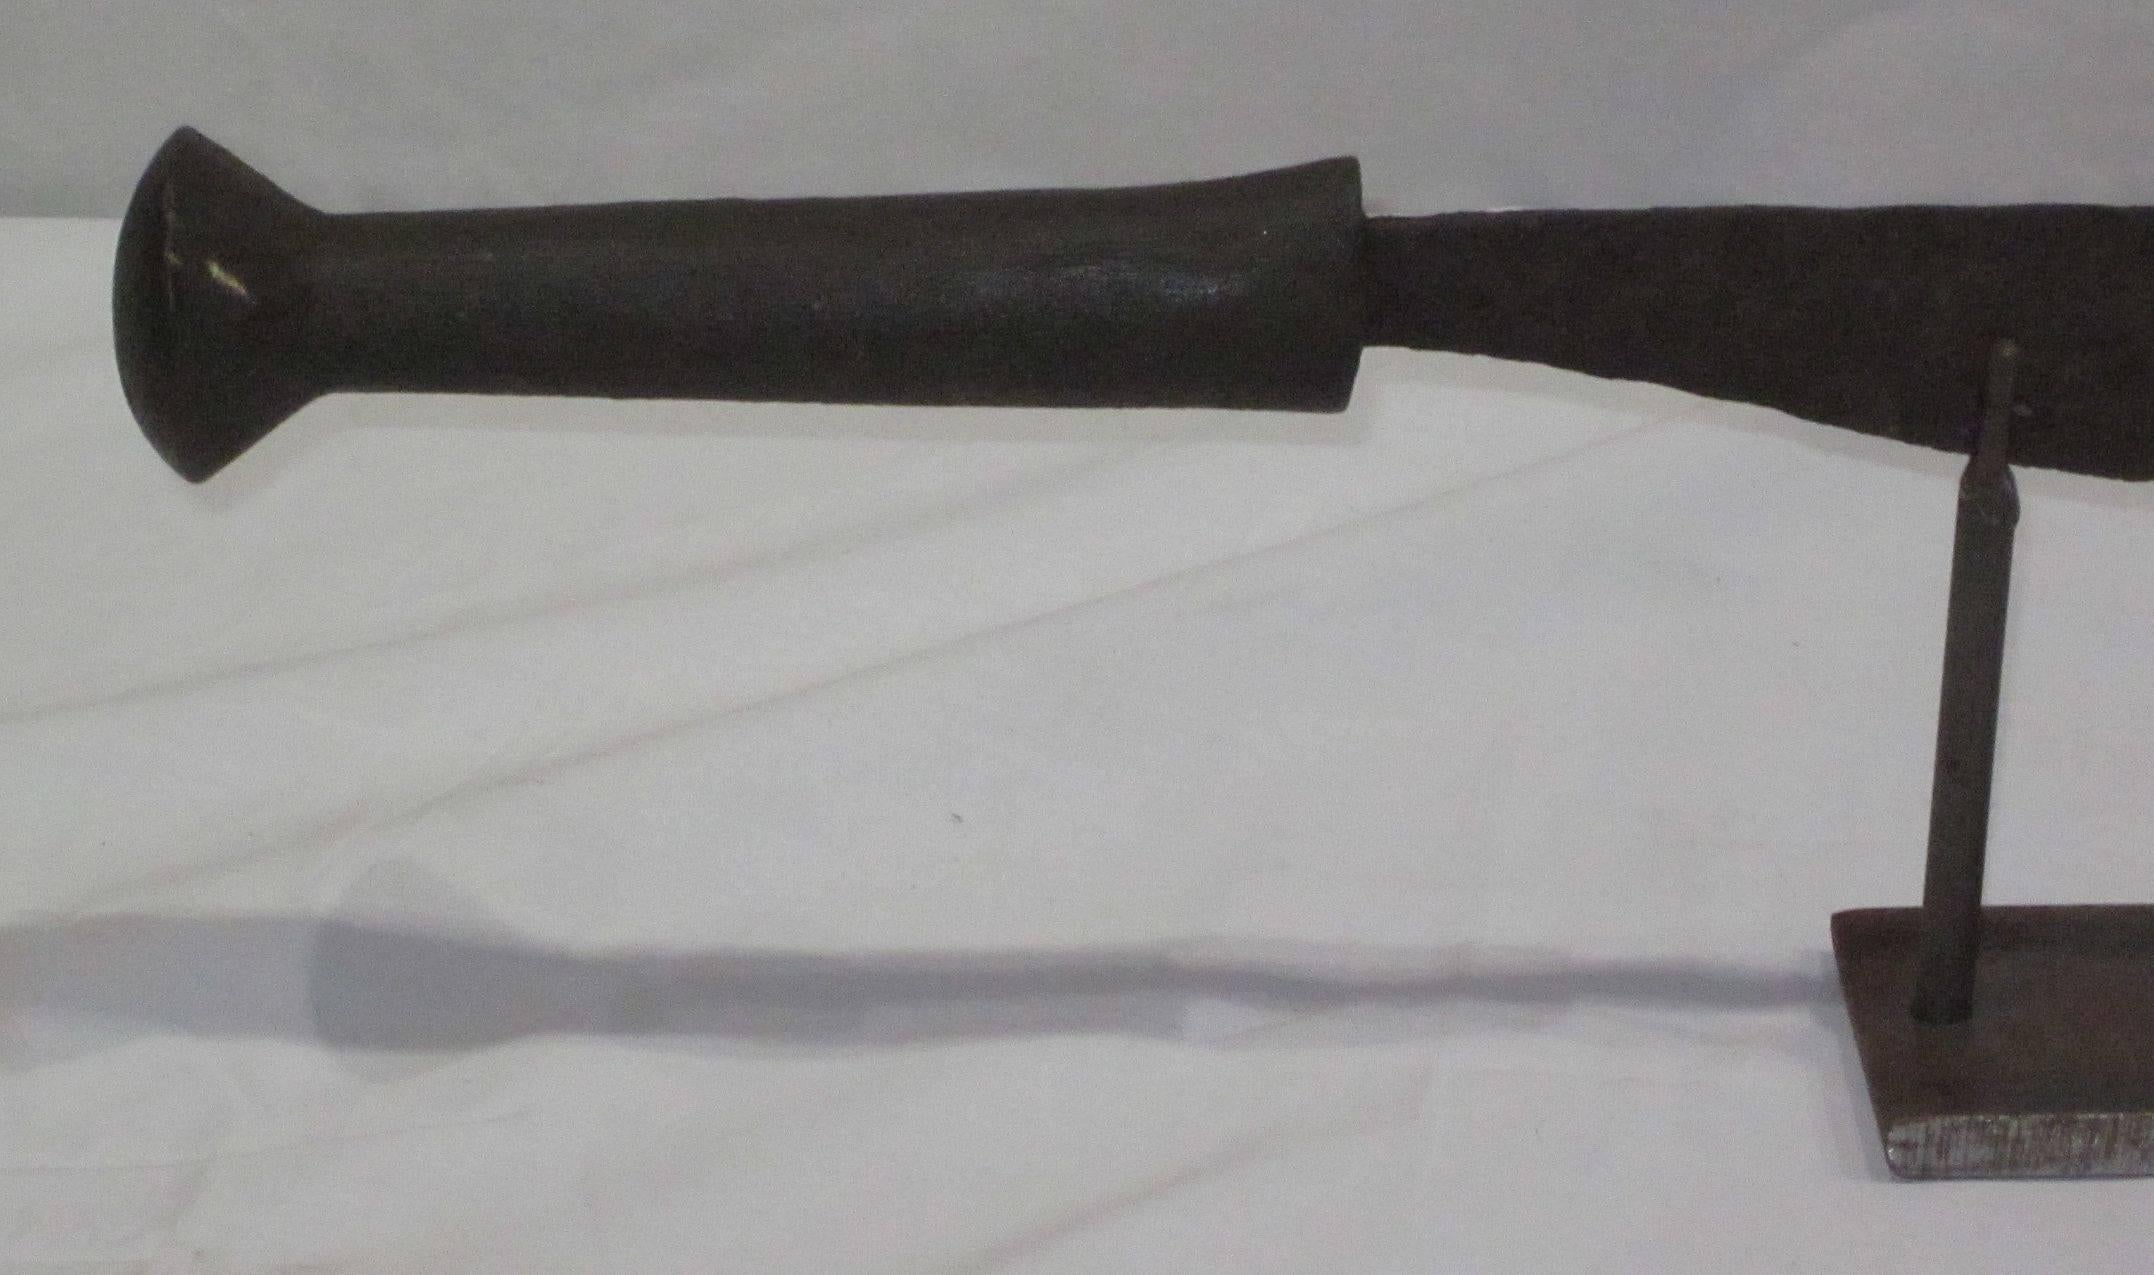 1920s African Congolese sword sculpture.
Wooden handle. Base measures 12